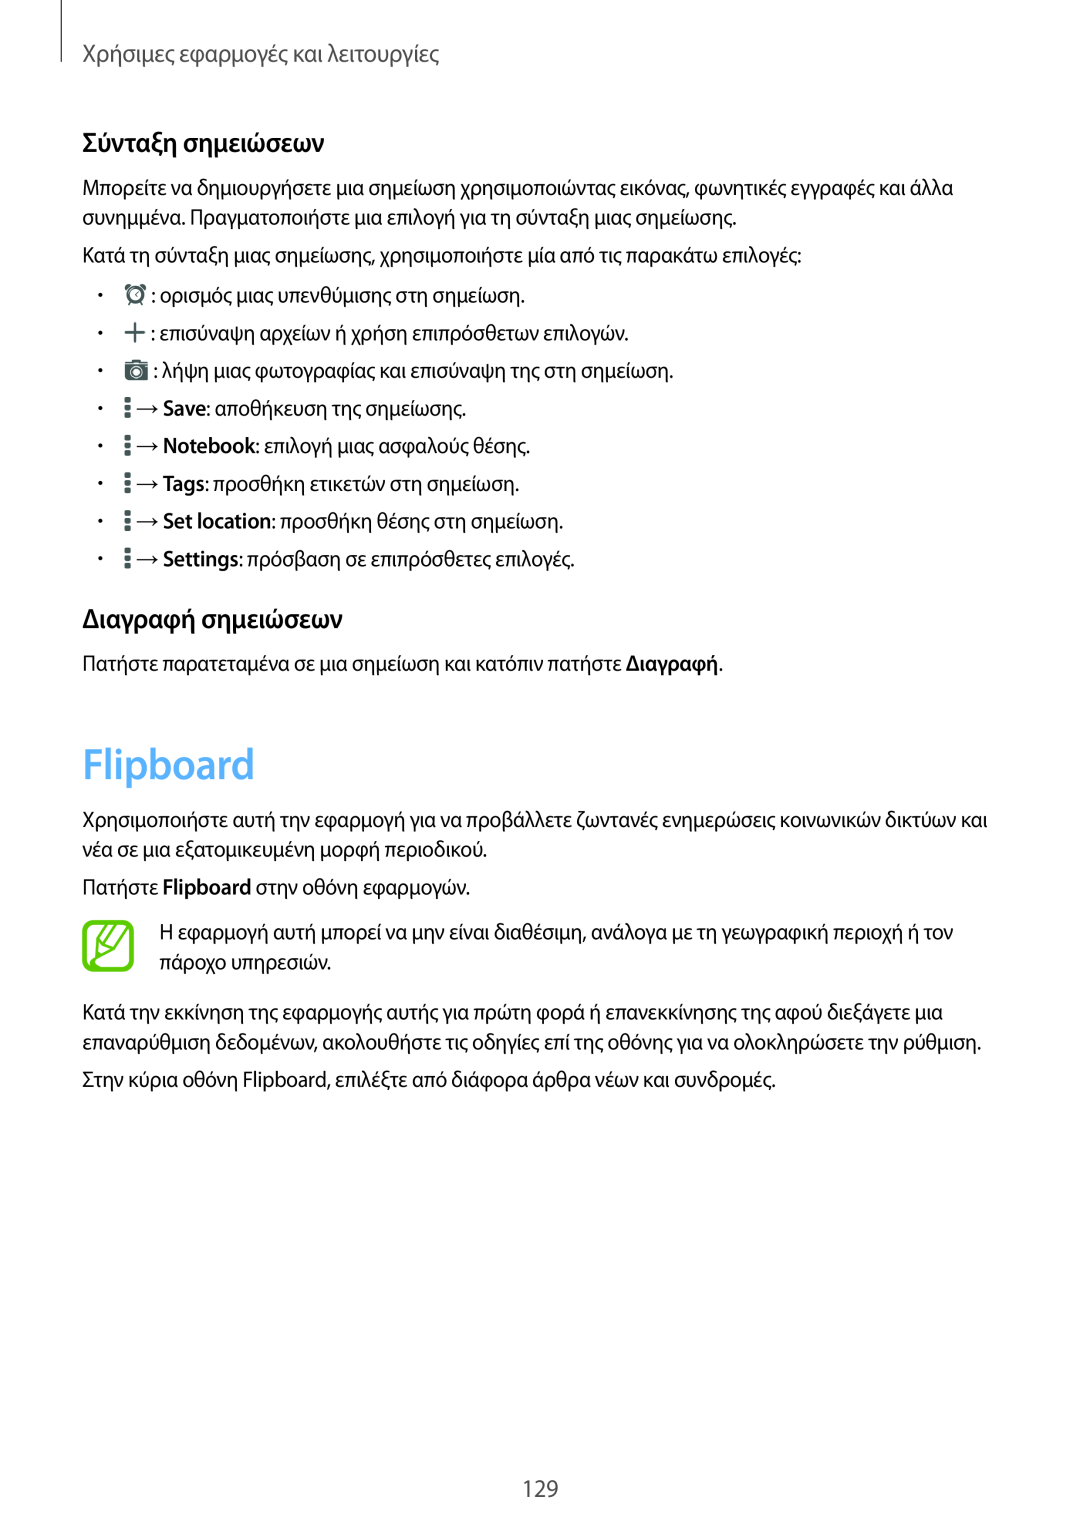 Samsung SM-T805NZWAEUR manual Flipboard, Σύνταξη σημειώσεων, Διαγραφή σημειώσεων, Χρήσιμες εφαρμογές και λειτουργίες 